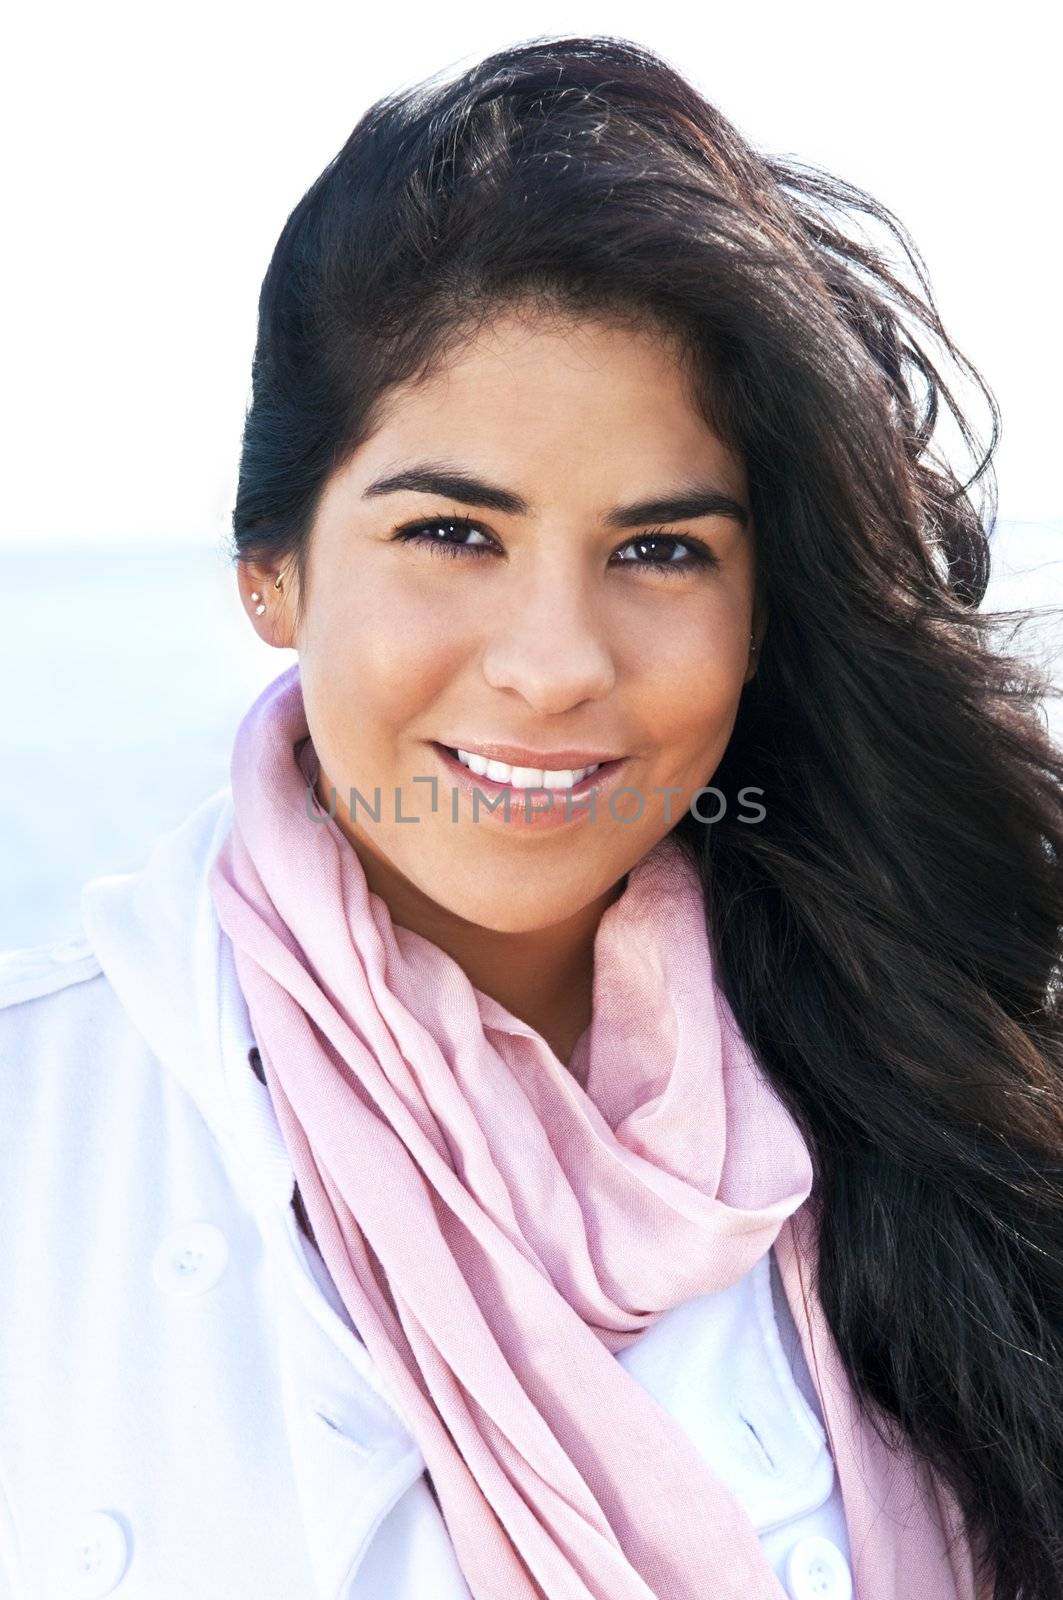 Portrait of beautiful smiling native american girl